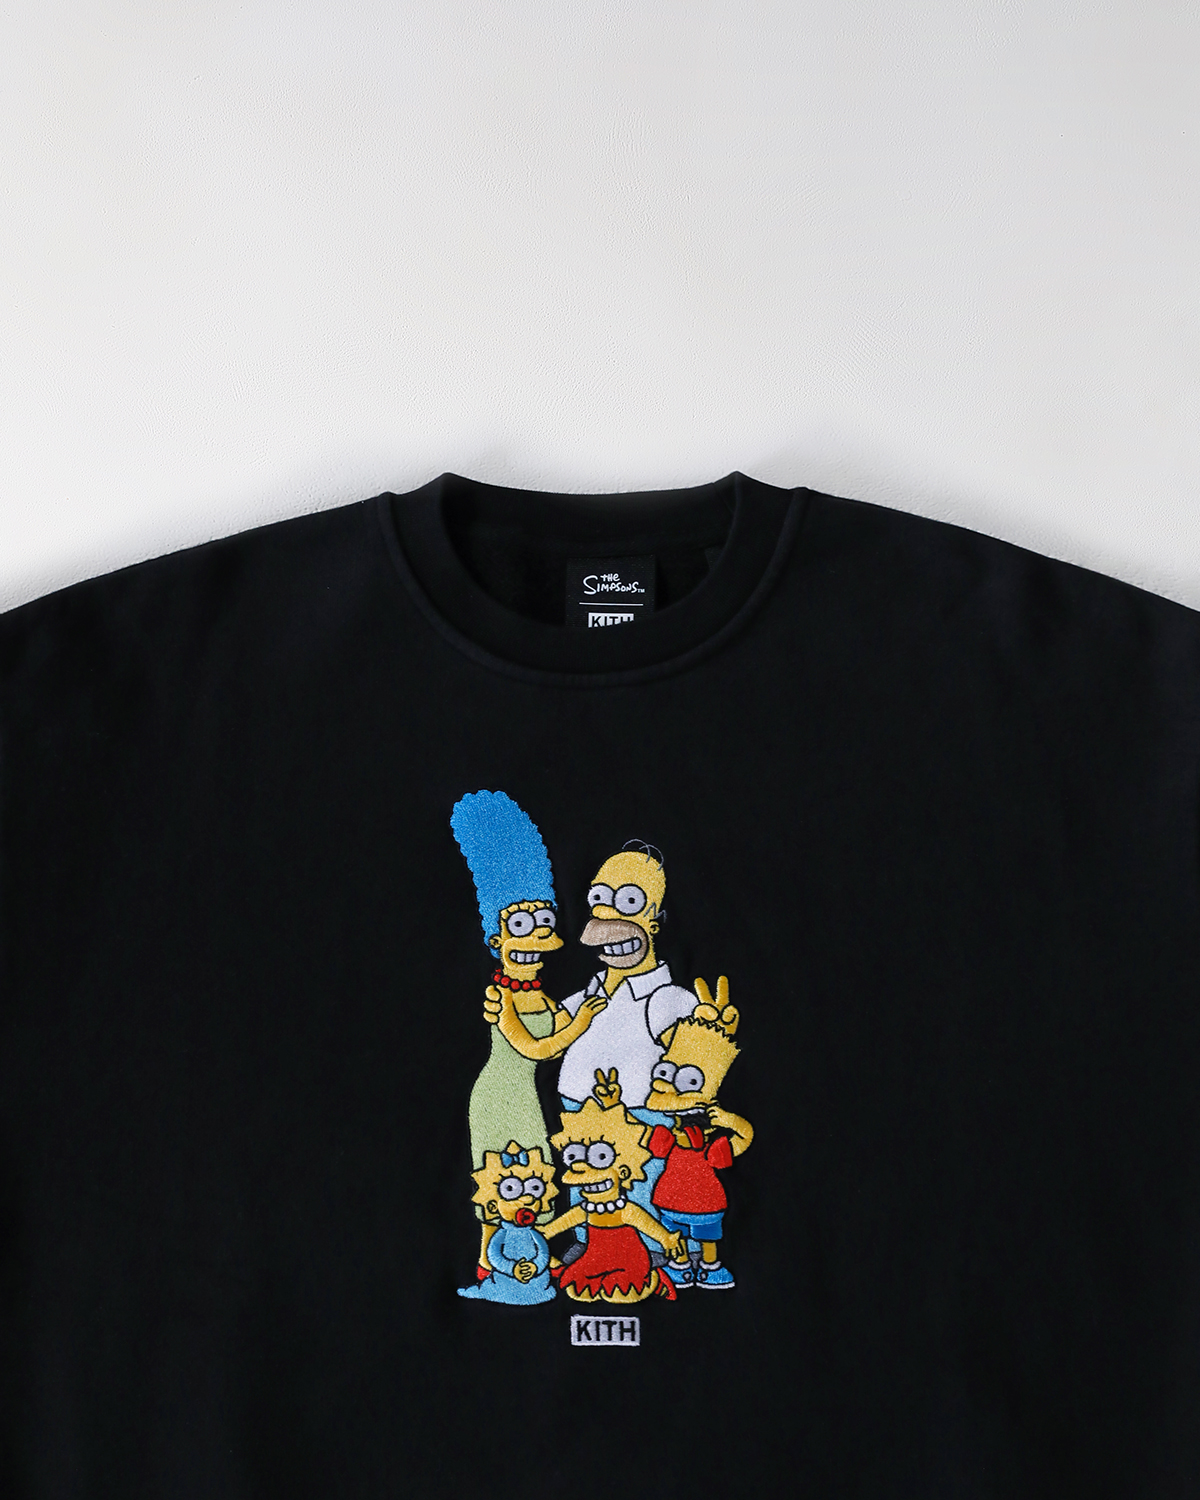 KITH for The Simpsonsが1月25日に発売